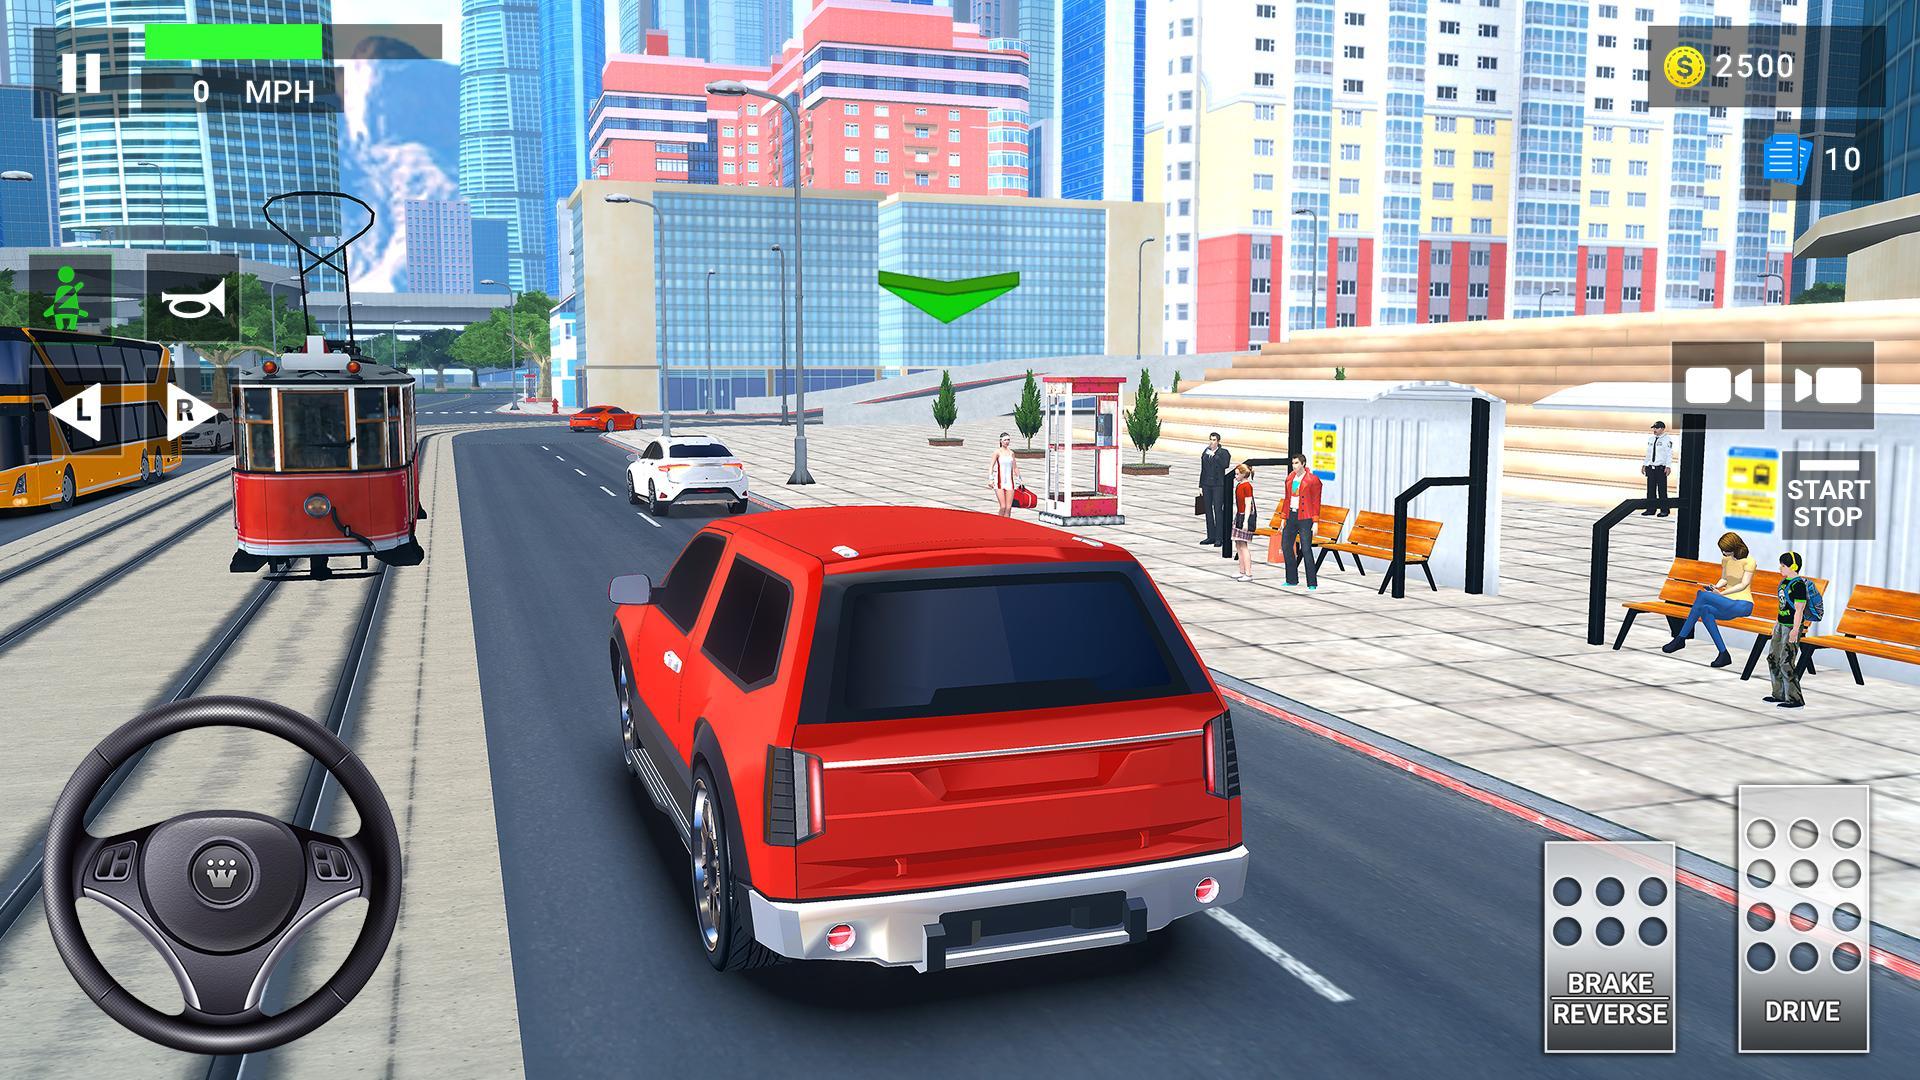 Driving Academy 2 Car Games & Driving School 2021 2.1 Screenshot 2